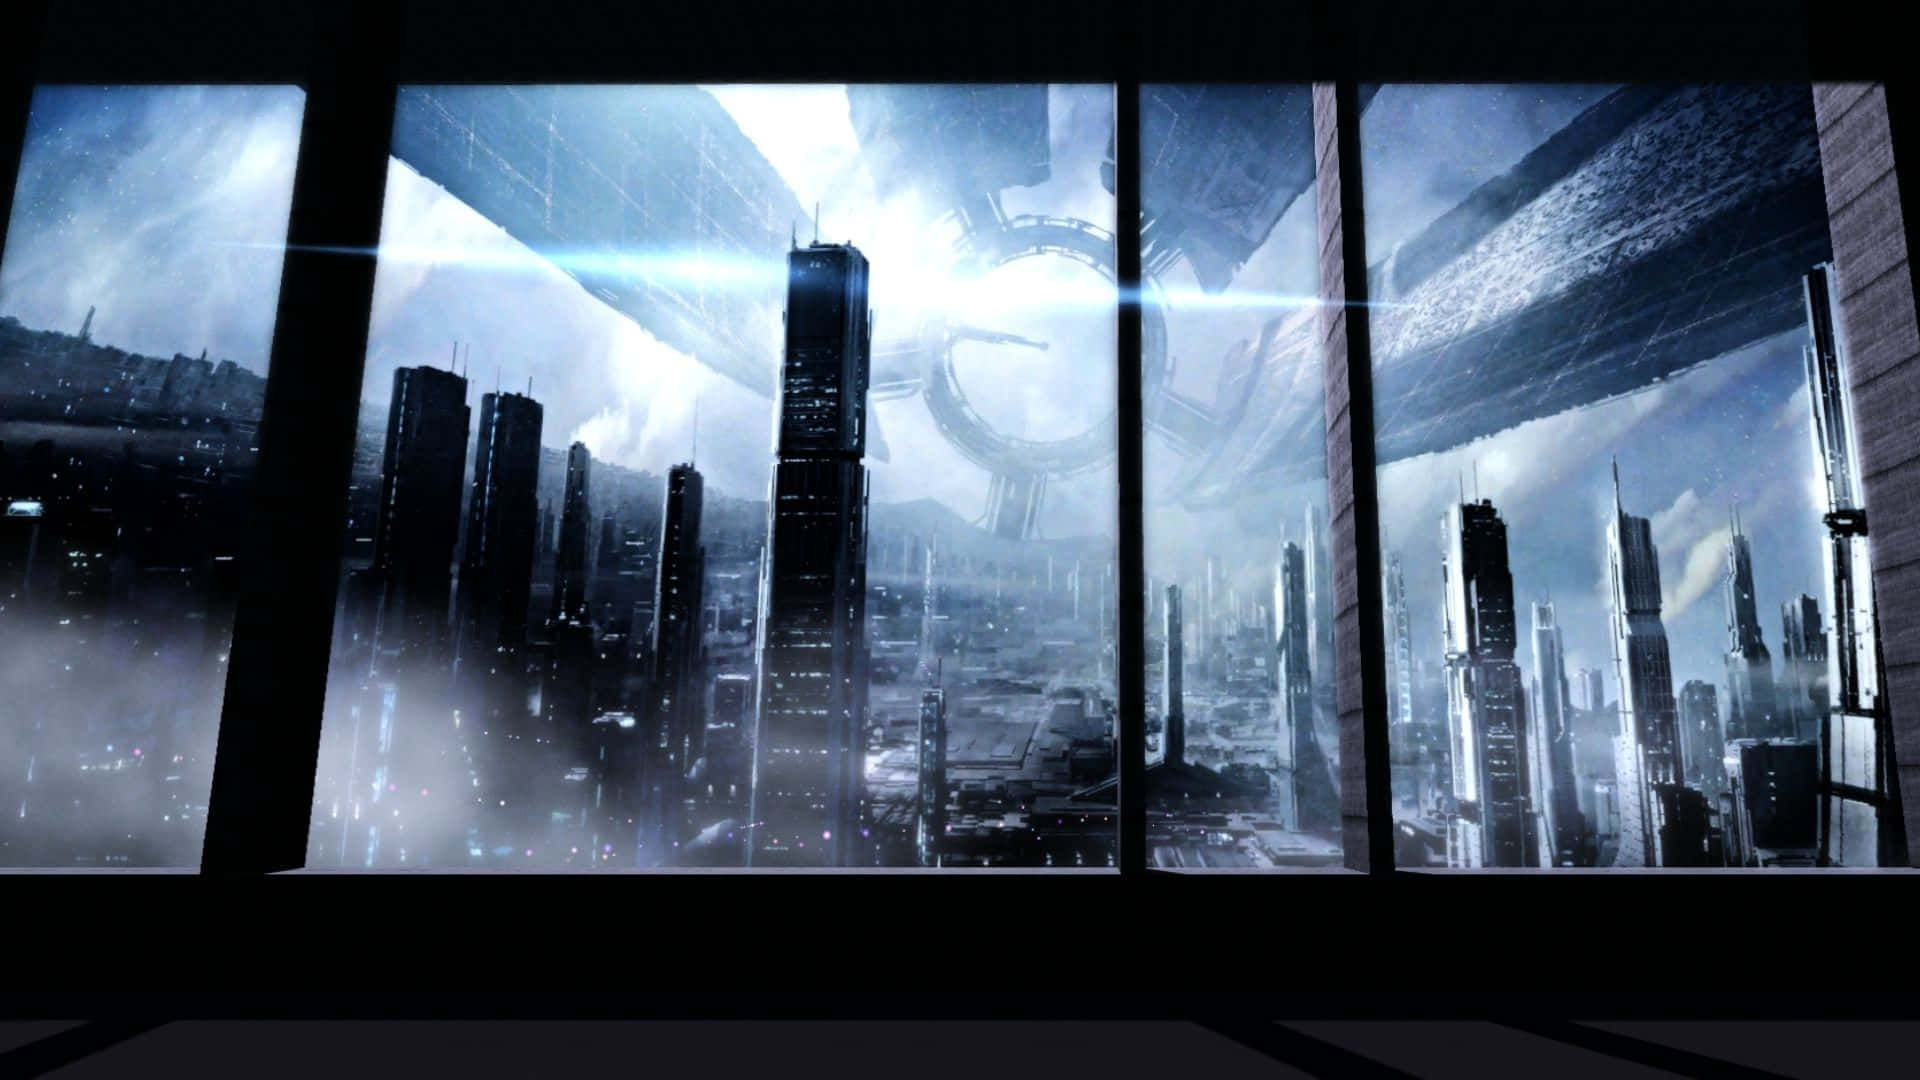 The majestic Mass Effect Citadel soars above a futuristic city skyline. Wallpaper